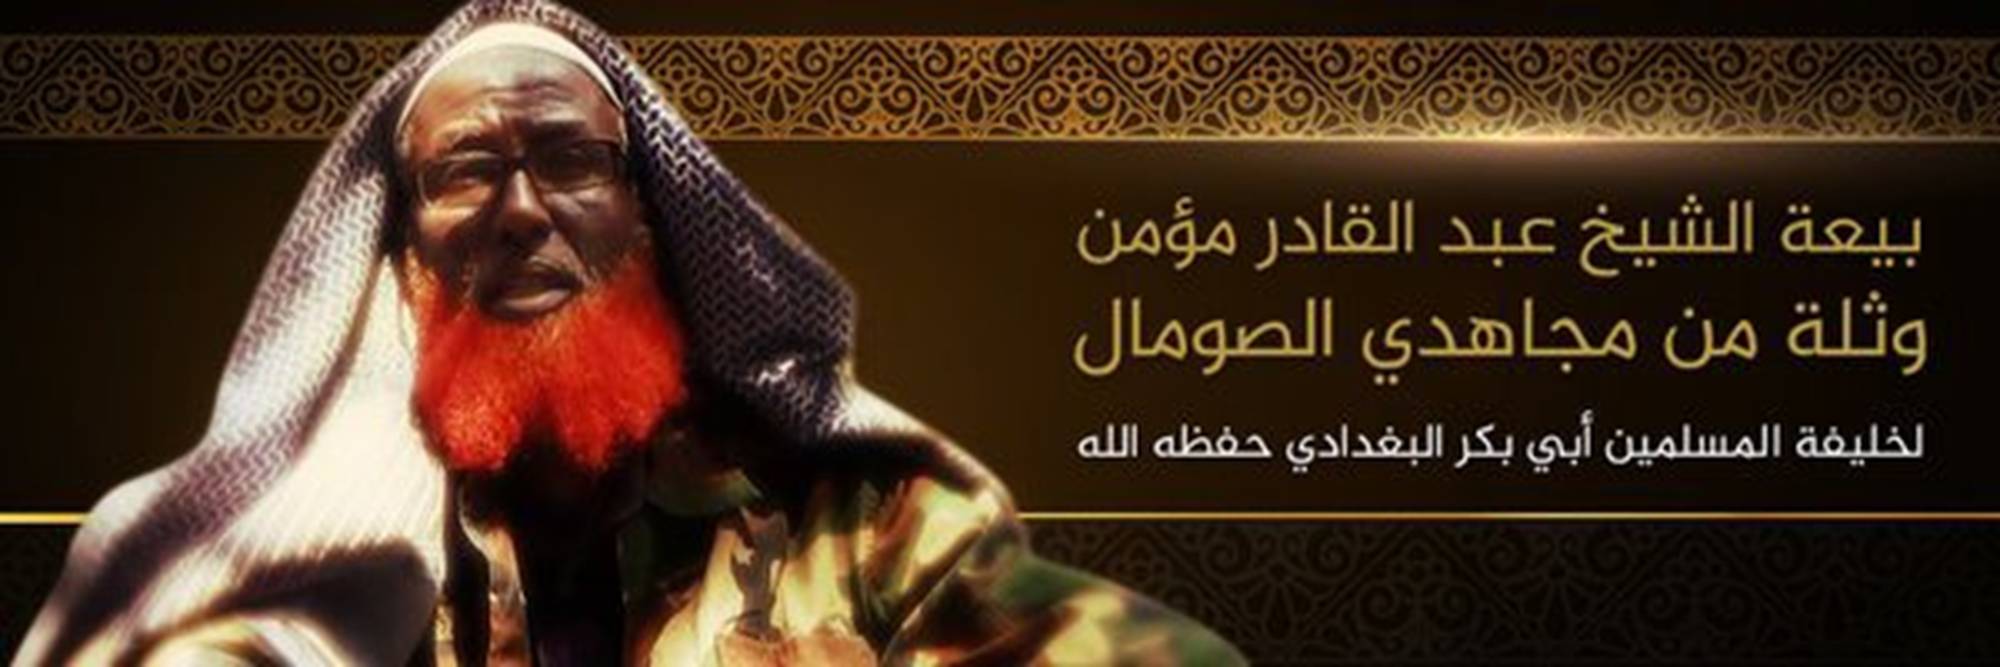 Nicht mehr bei Al-Kaida: Abduqadir Mumin